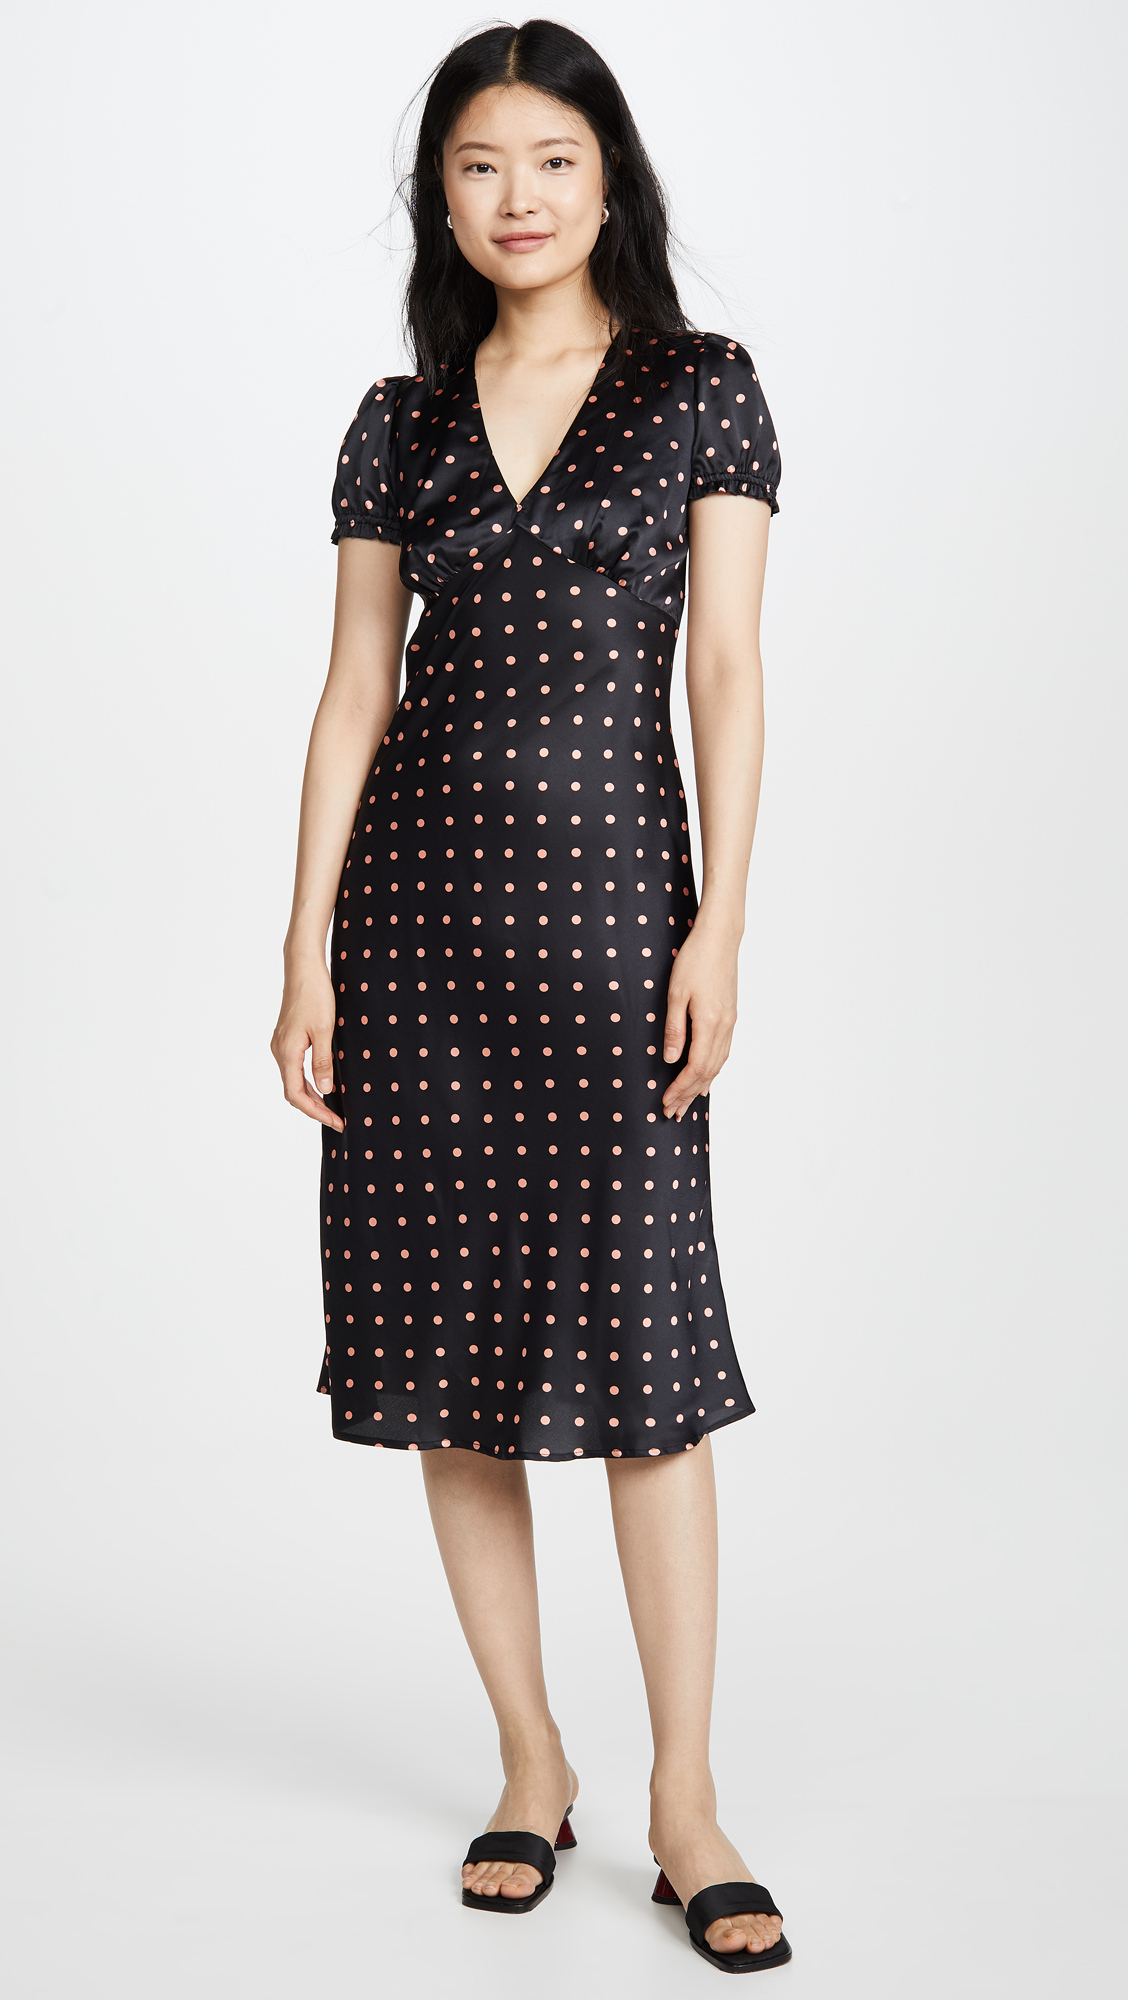 shopbop-polka-dot-dress.jpg